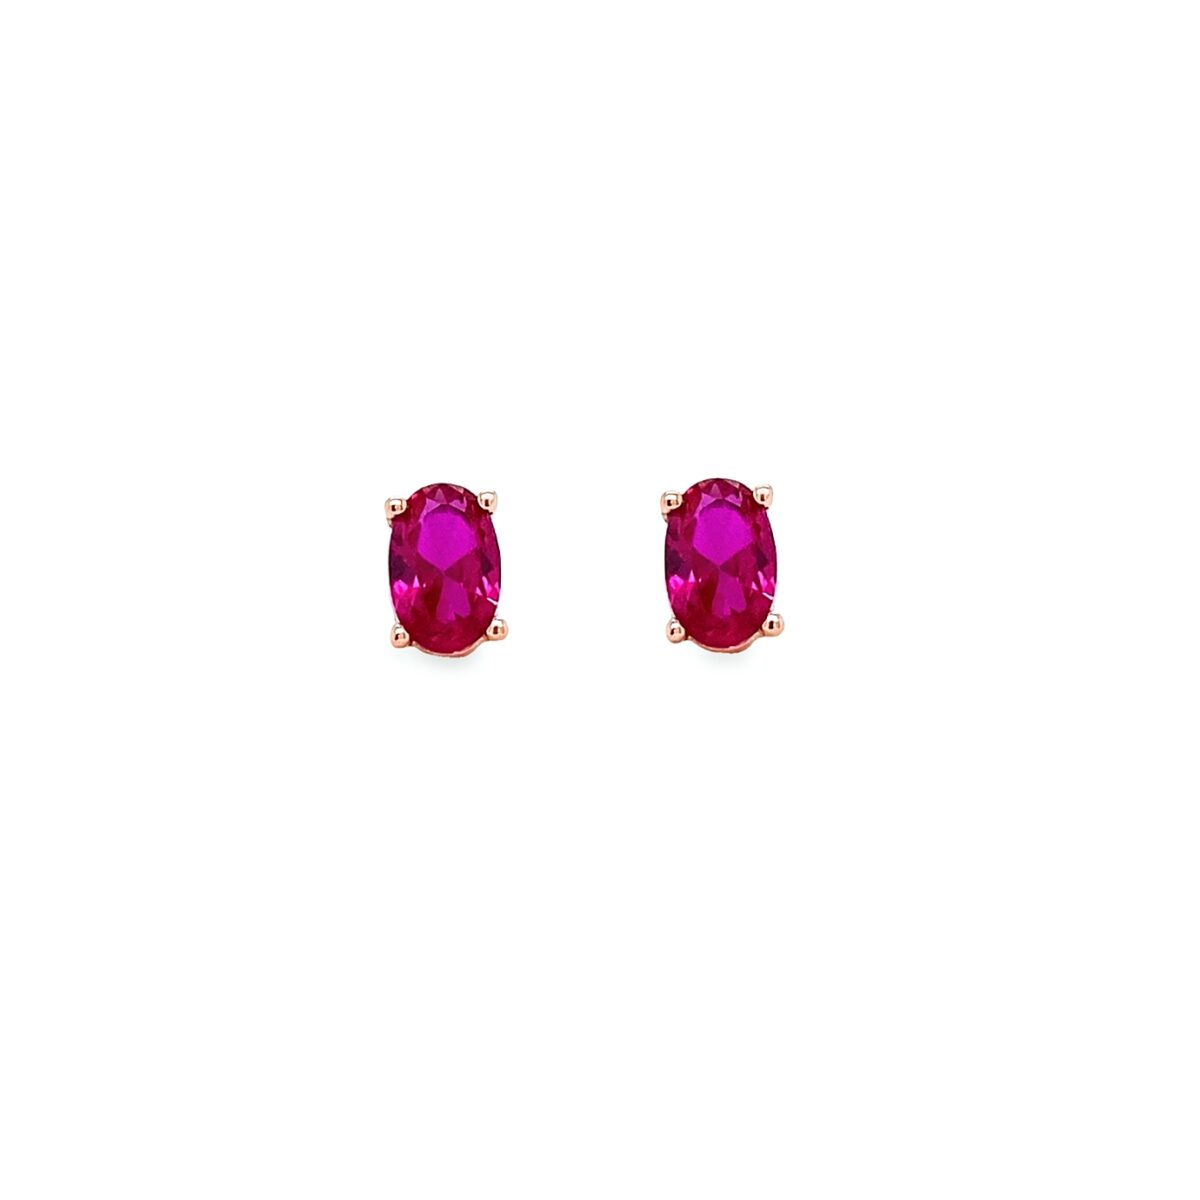 Jewellers - Σκουλαρίκι μονόπετρο με κόκκινο ζιργκόν